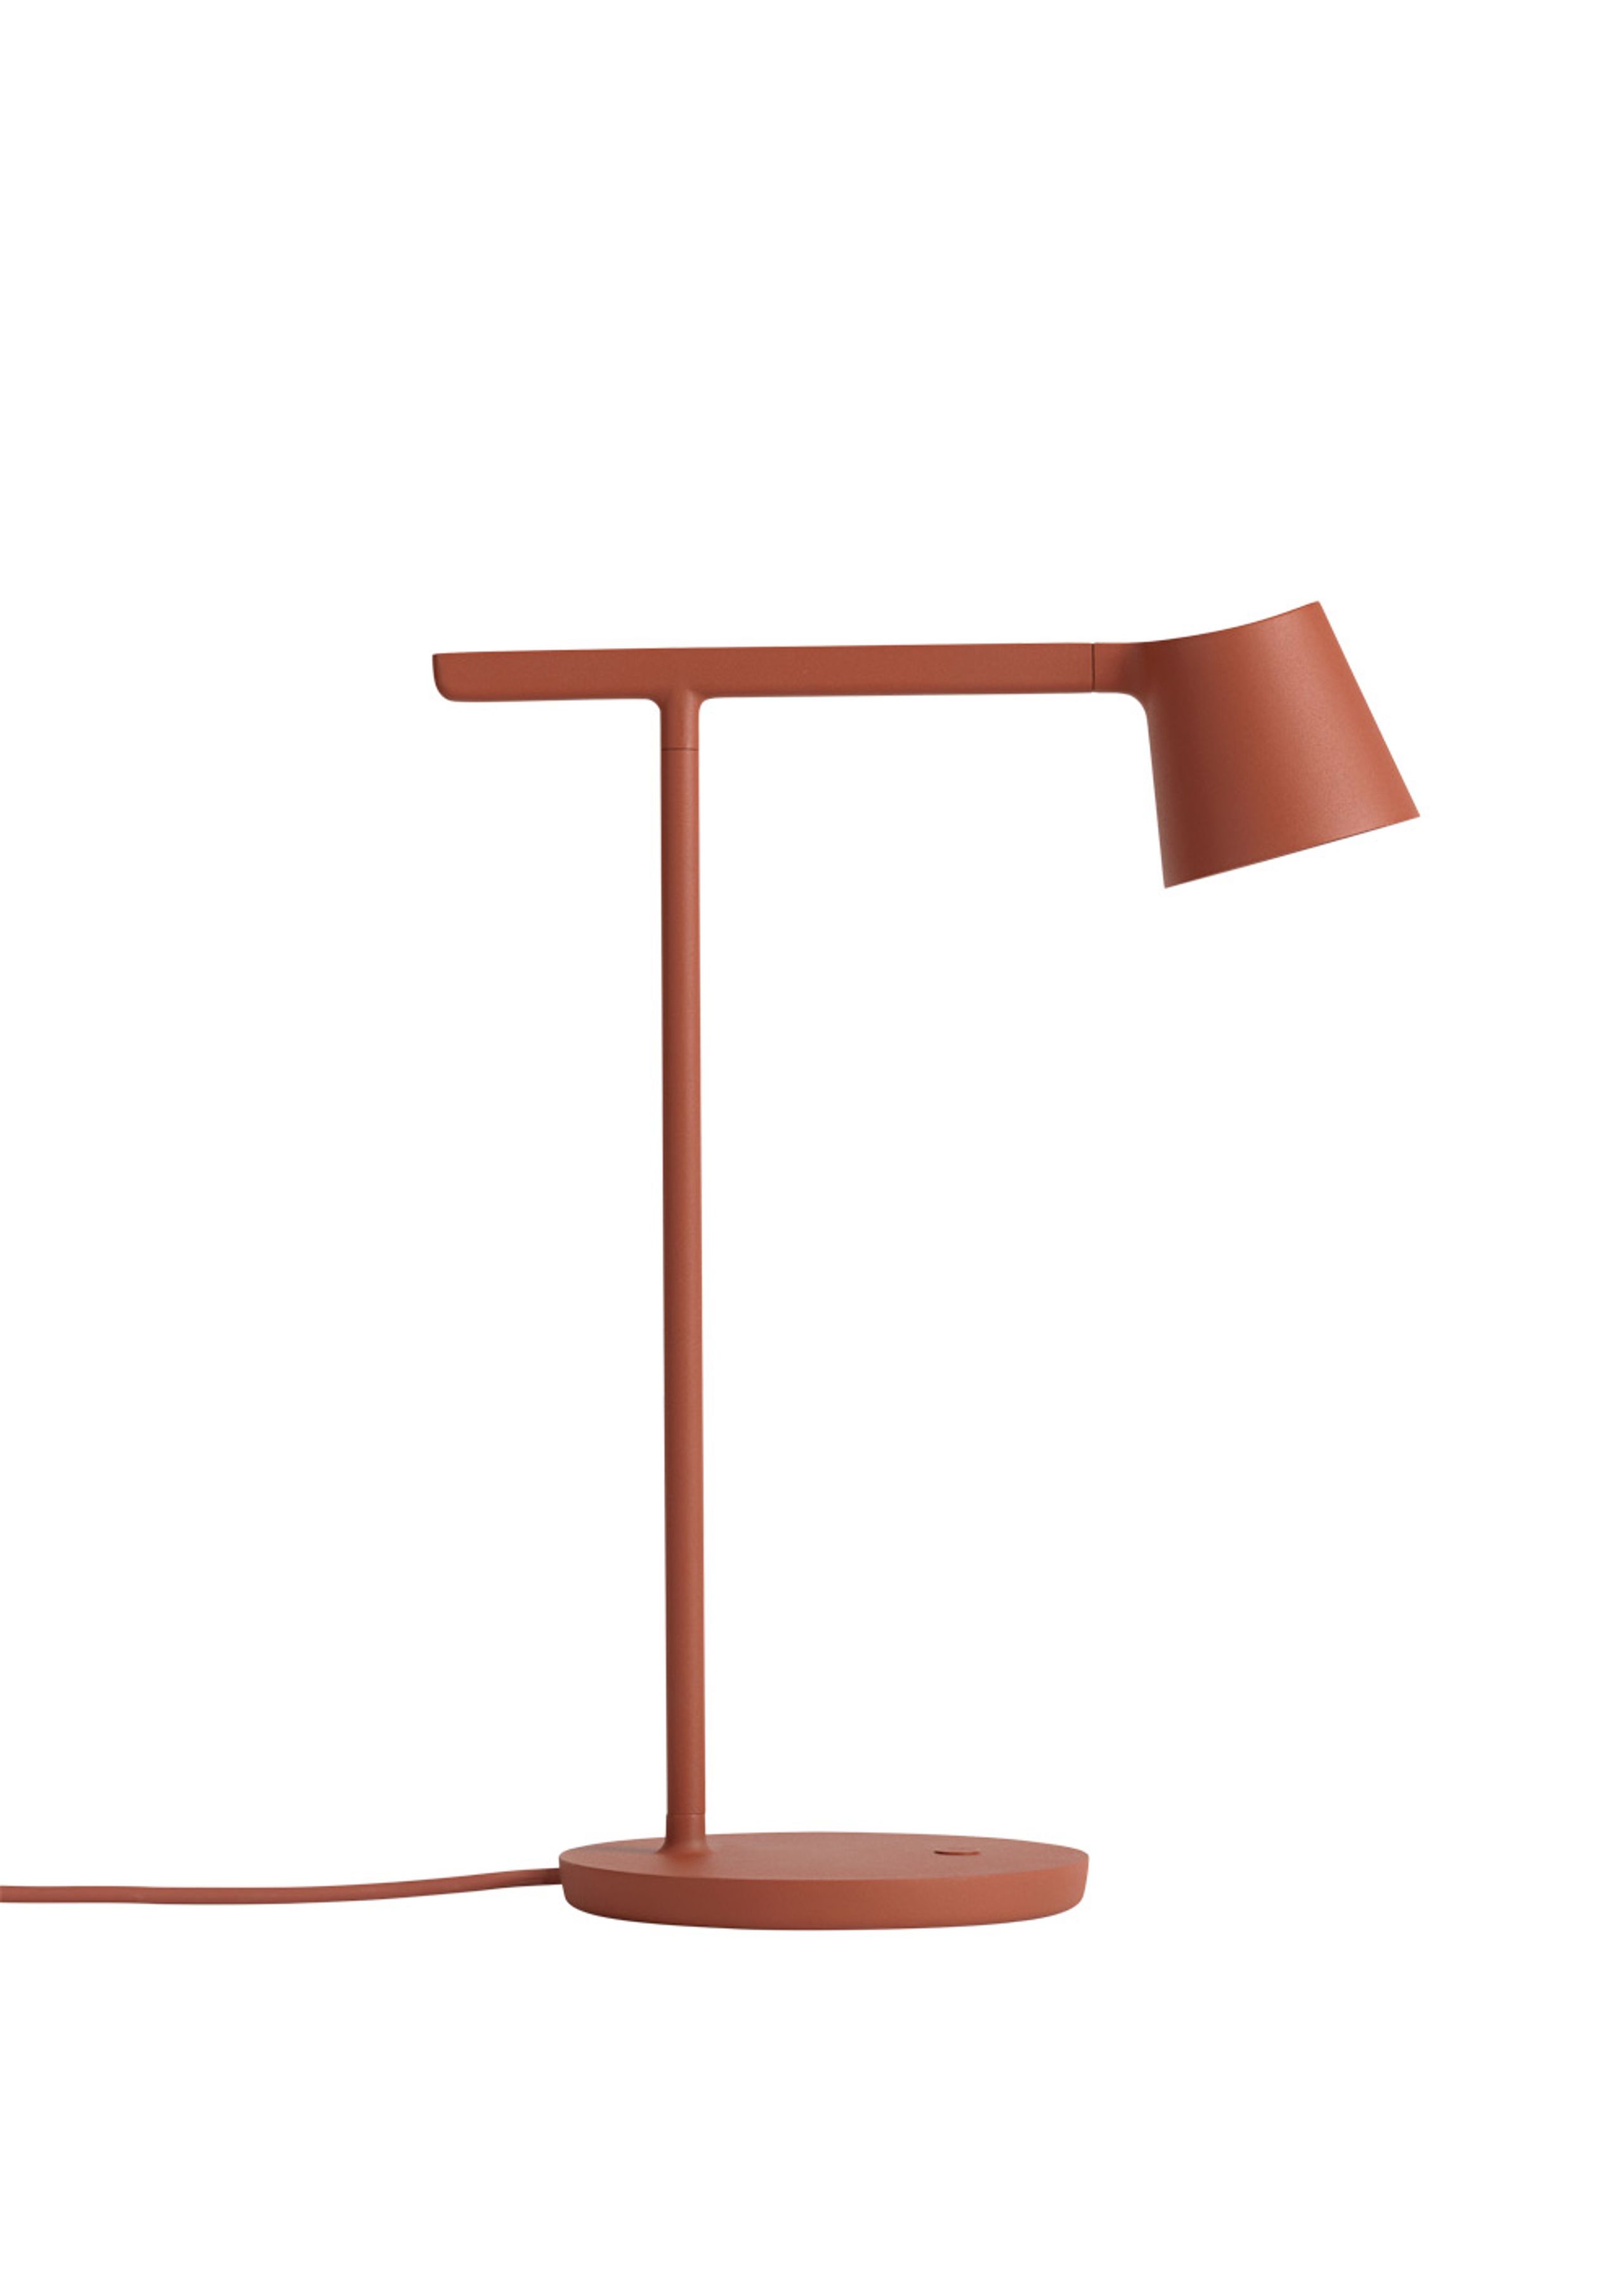 Muuto - Lampe de table - Tip Tablelamp - Copper